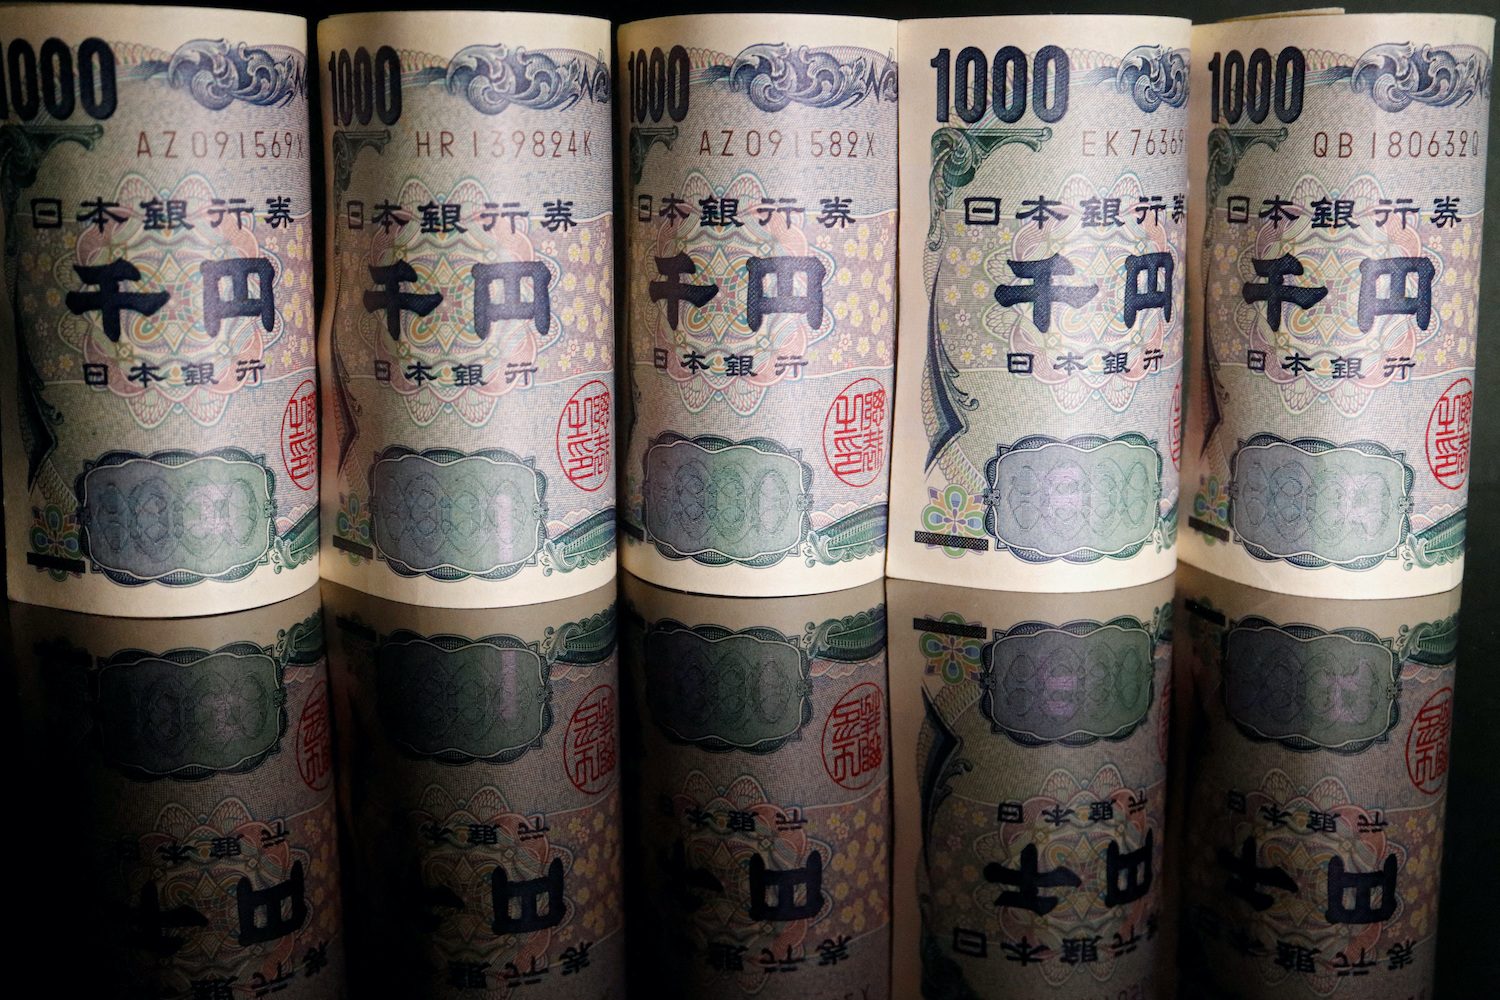 Japan’s suspected FX intervention fails to stem yen slide